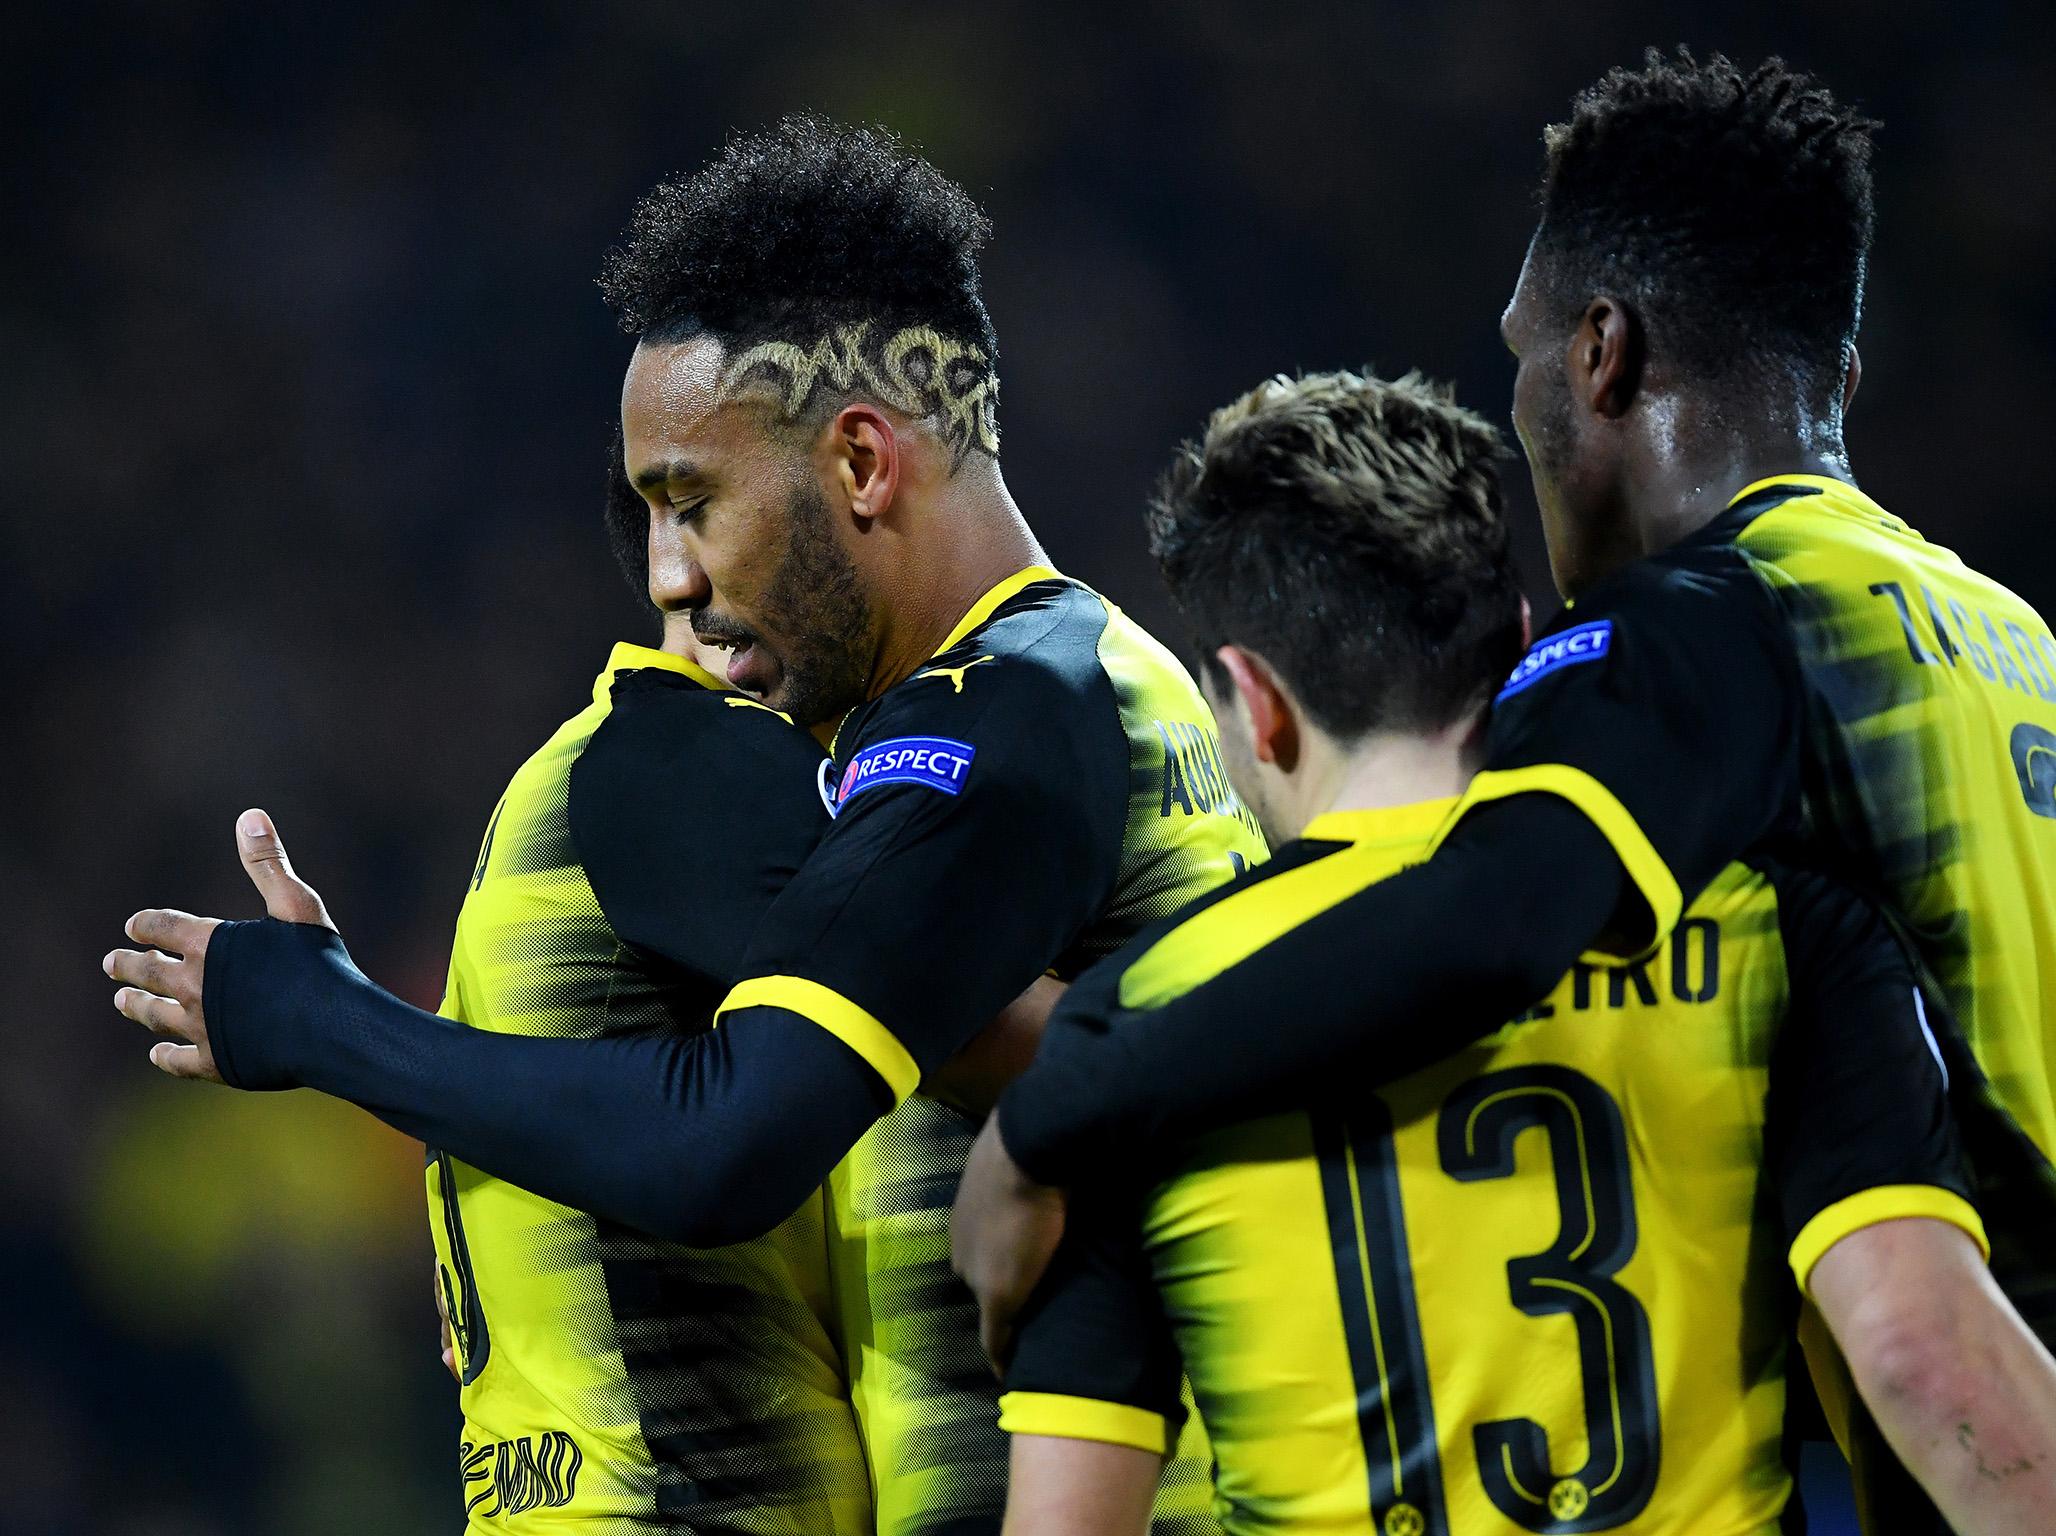 Dortmund took the lead